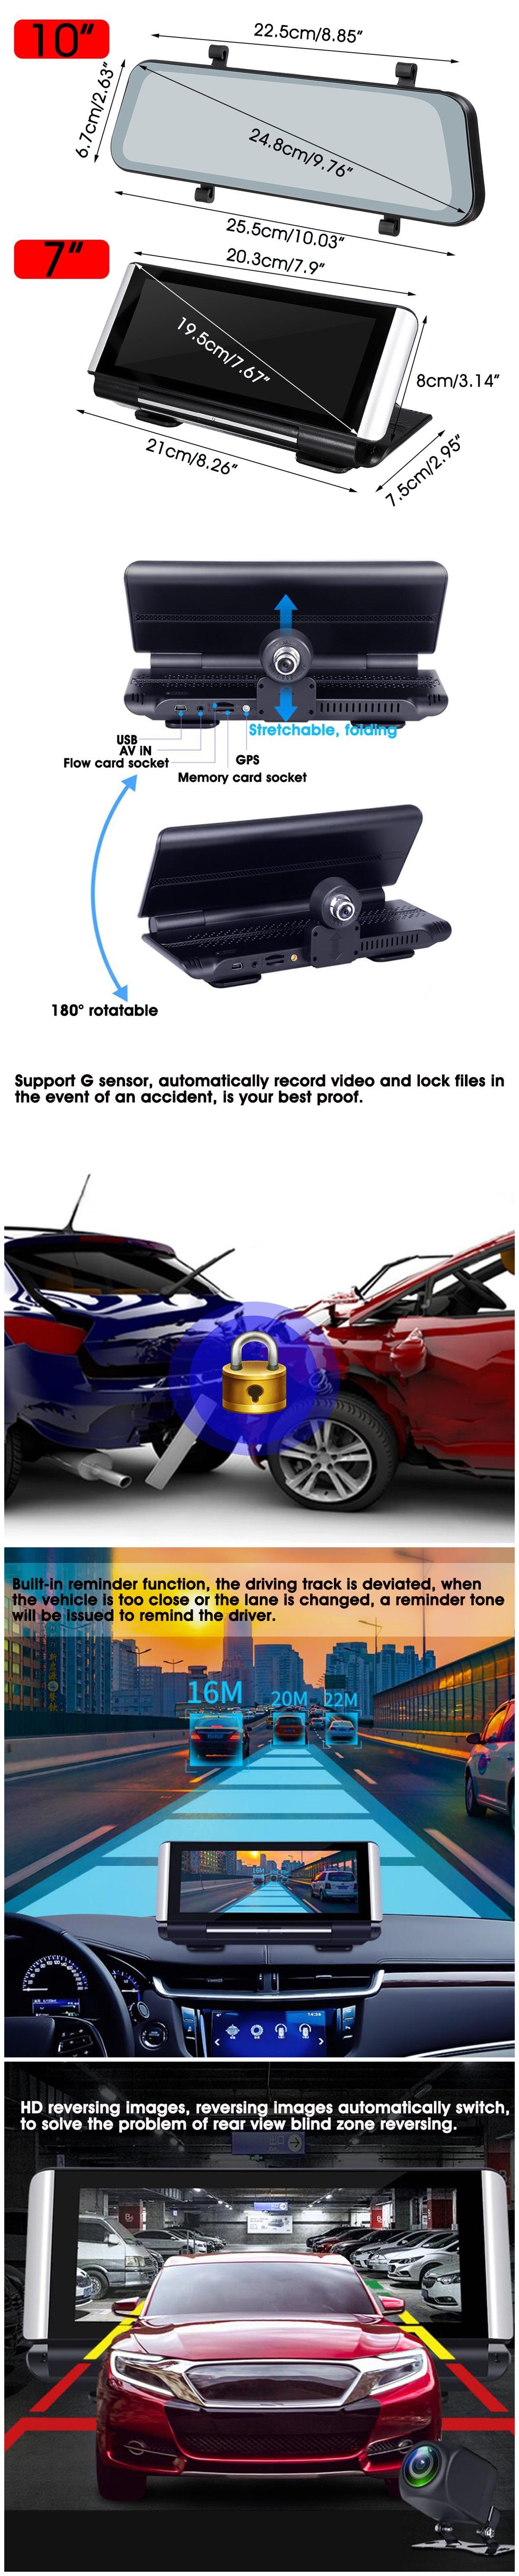 7quot--10quot-Car-DVR-LCD-Rear-Reversing-Parking-Detector-Radar-Sensor-System-Alarm-1653068